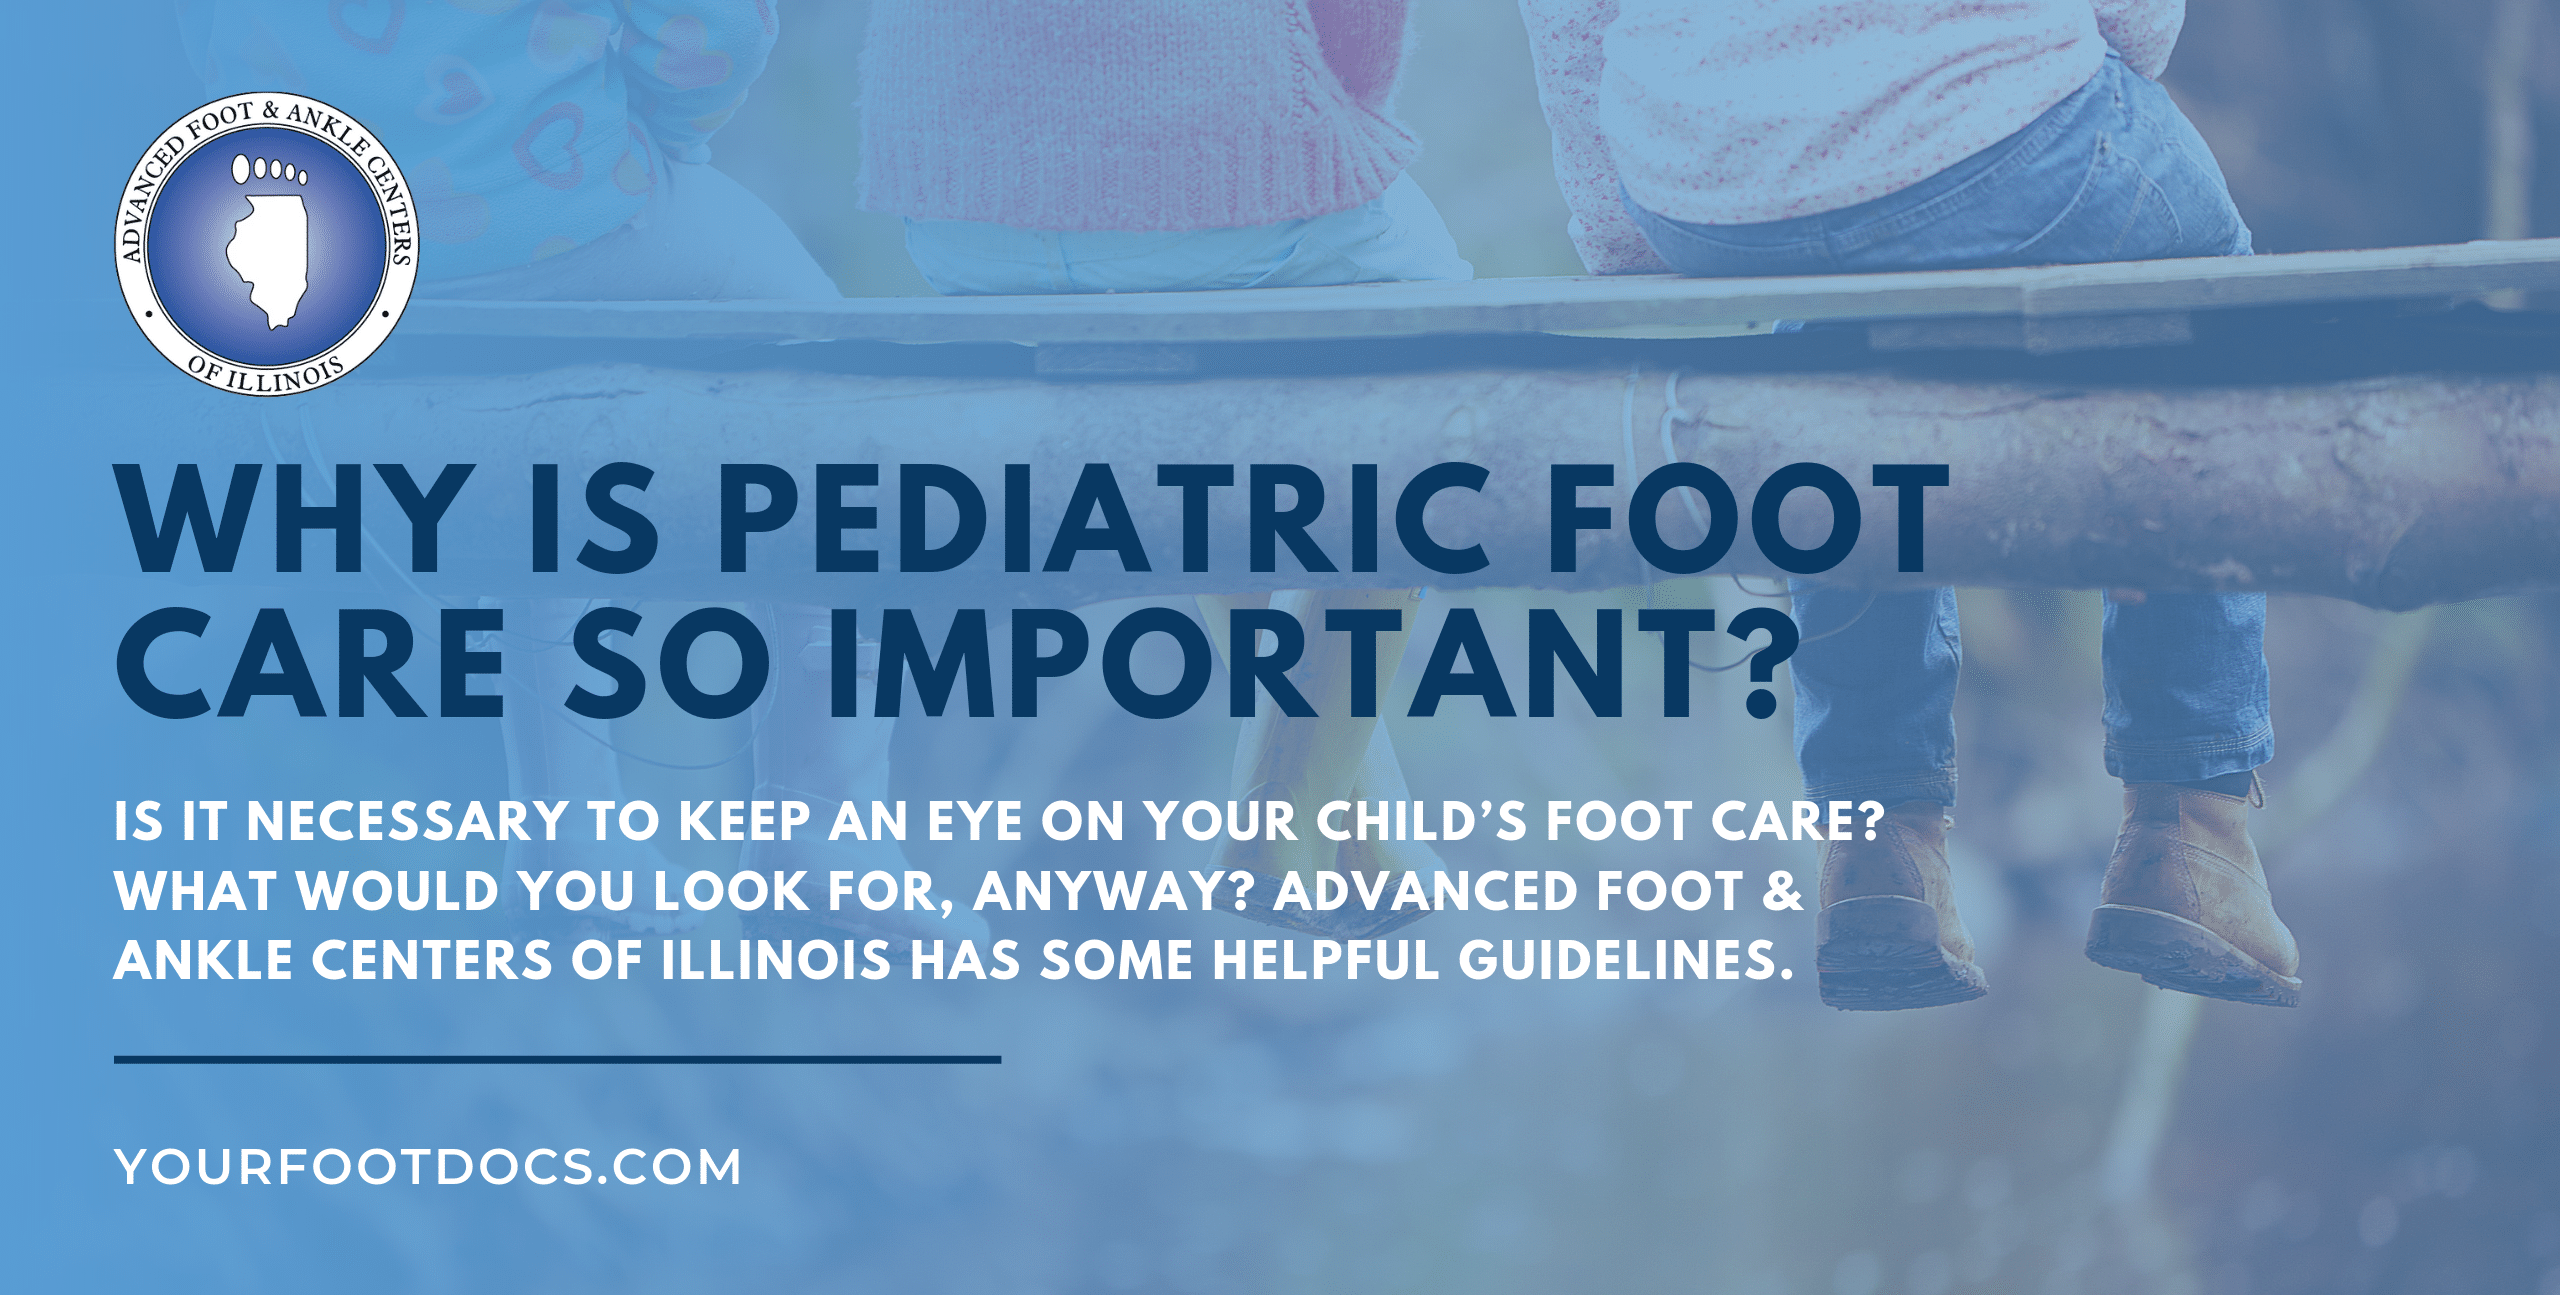 Pediatric footcare